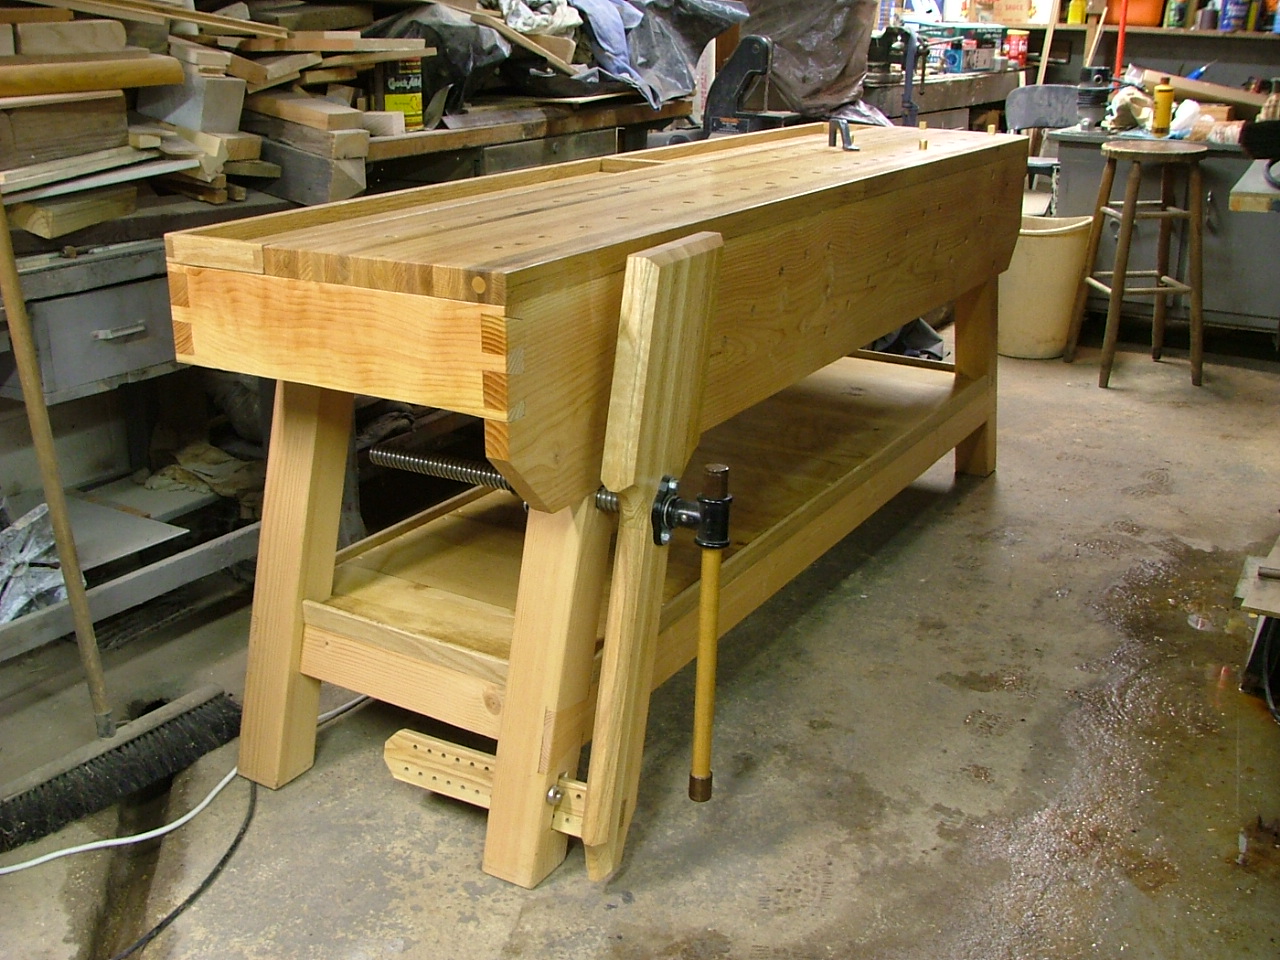 My Work Bench | KiltedKacher's Woodworking Site